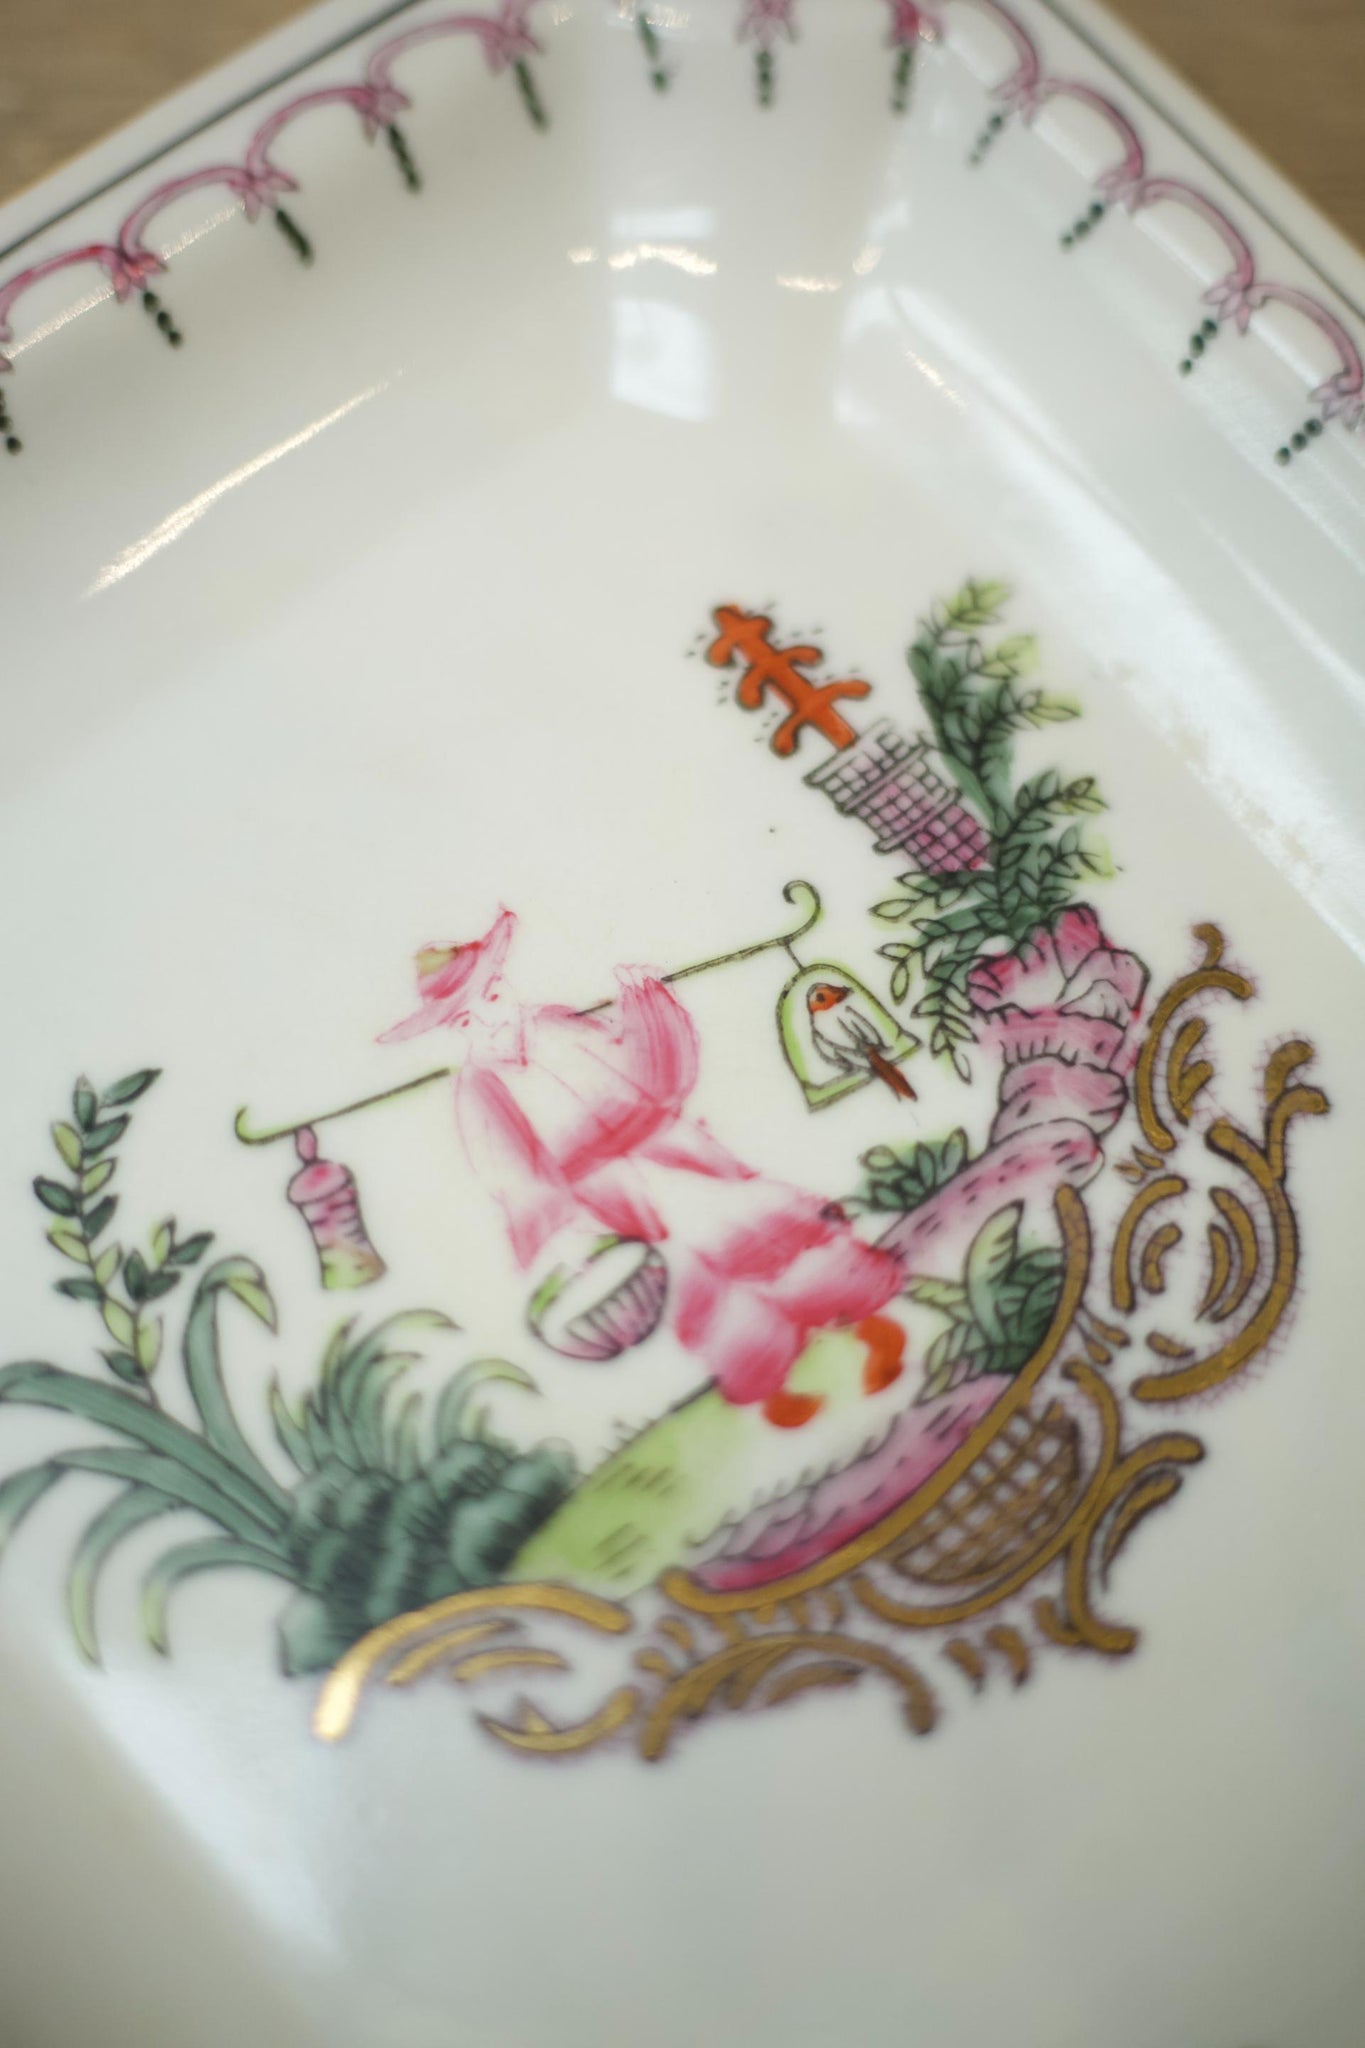 c.1920 Chinoiserie porcelain plates